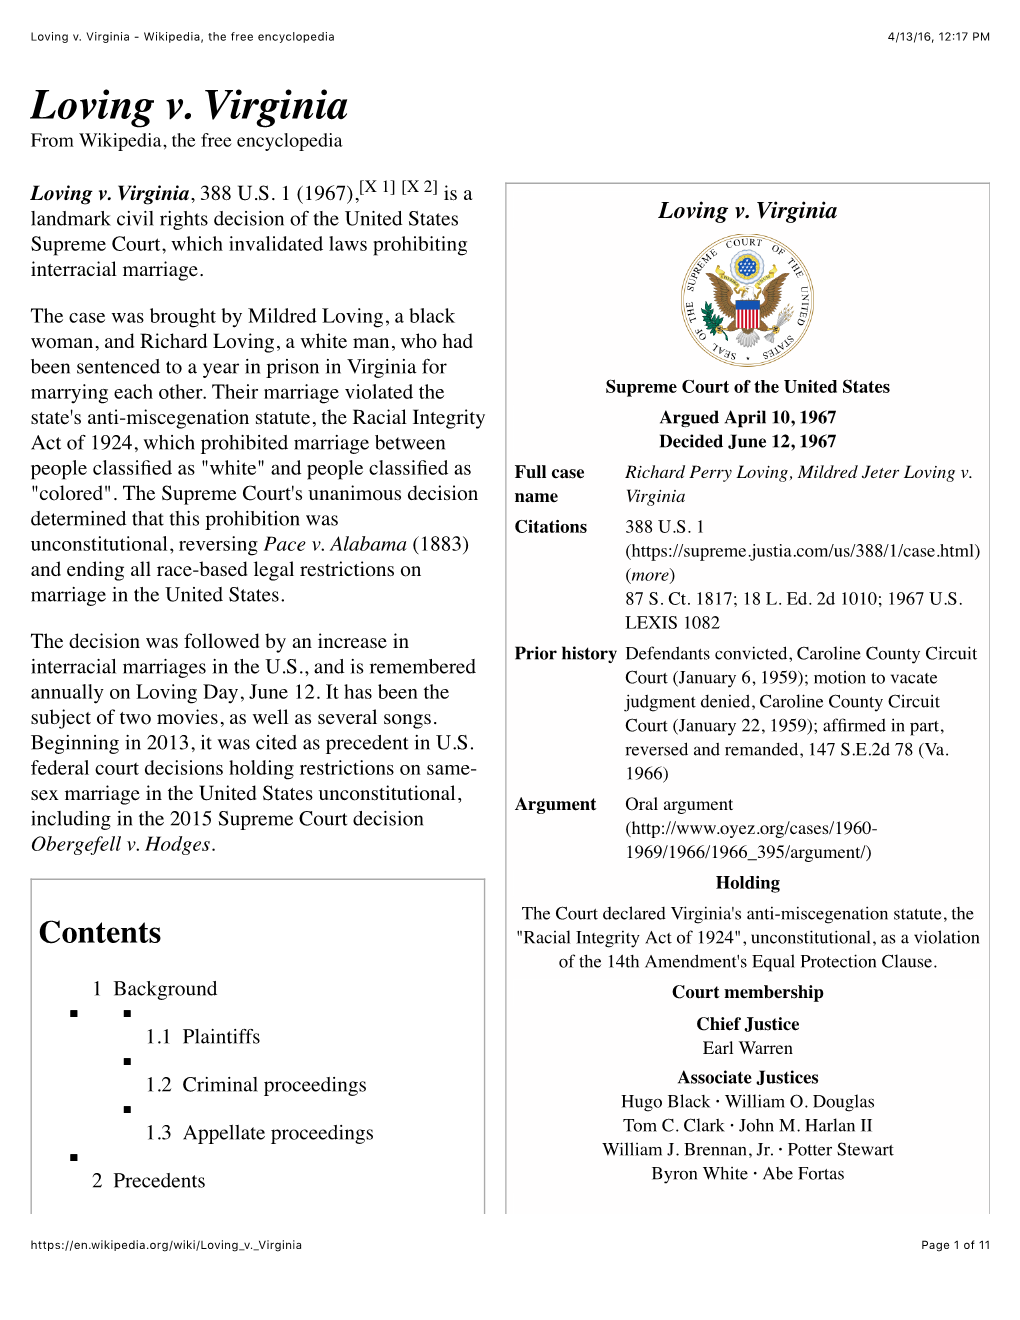 Loving V. Virginia - Wikipedia, the Free Encyclopedia 4/13/16, 12:17 PM